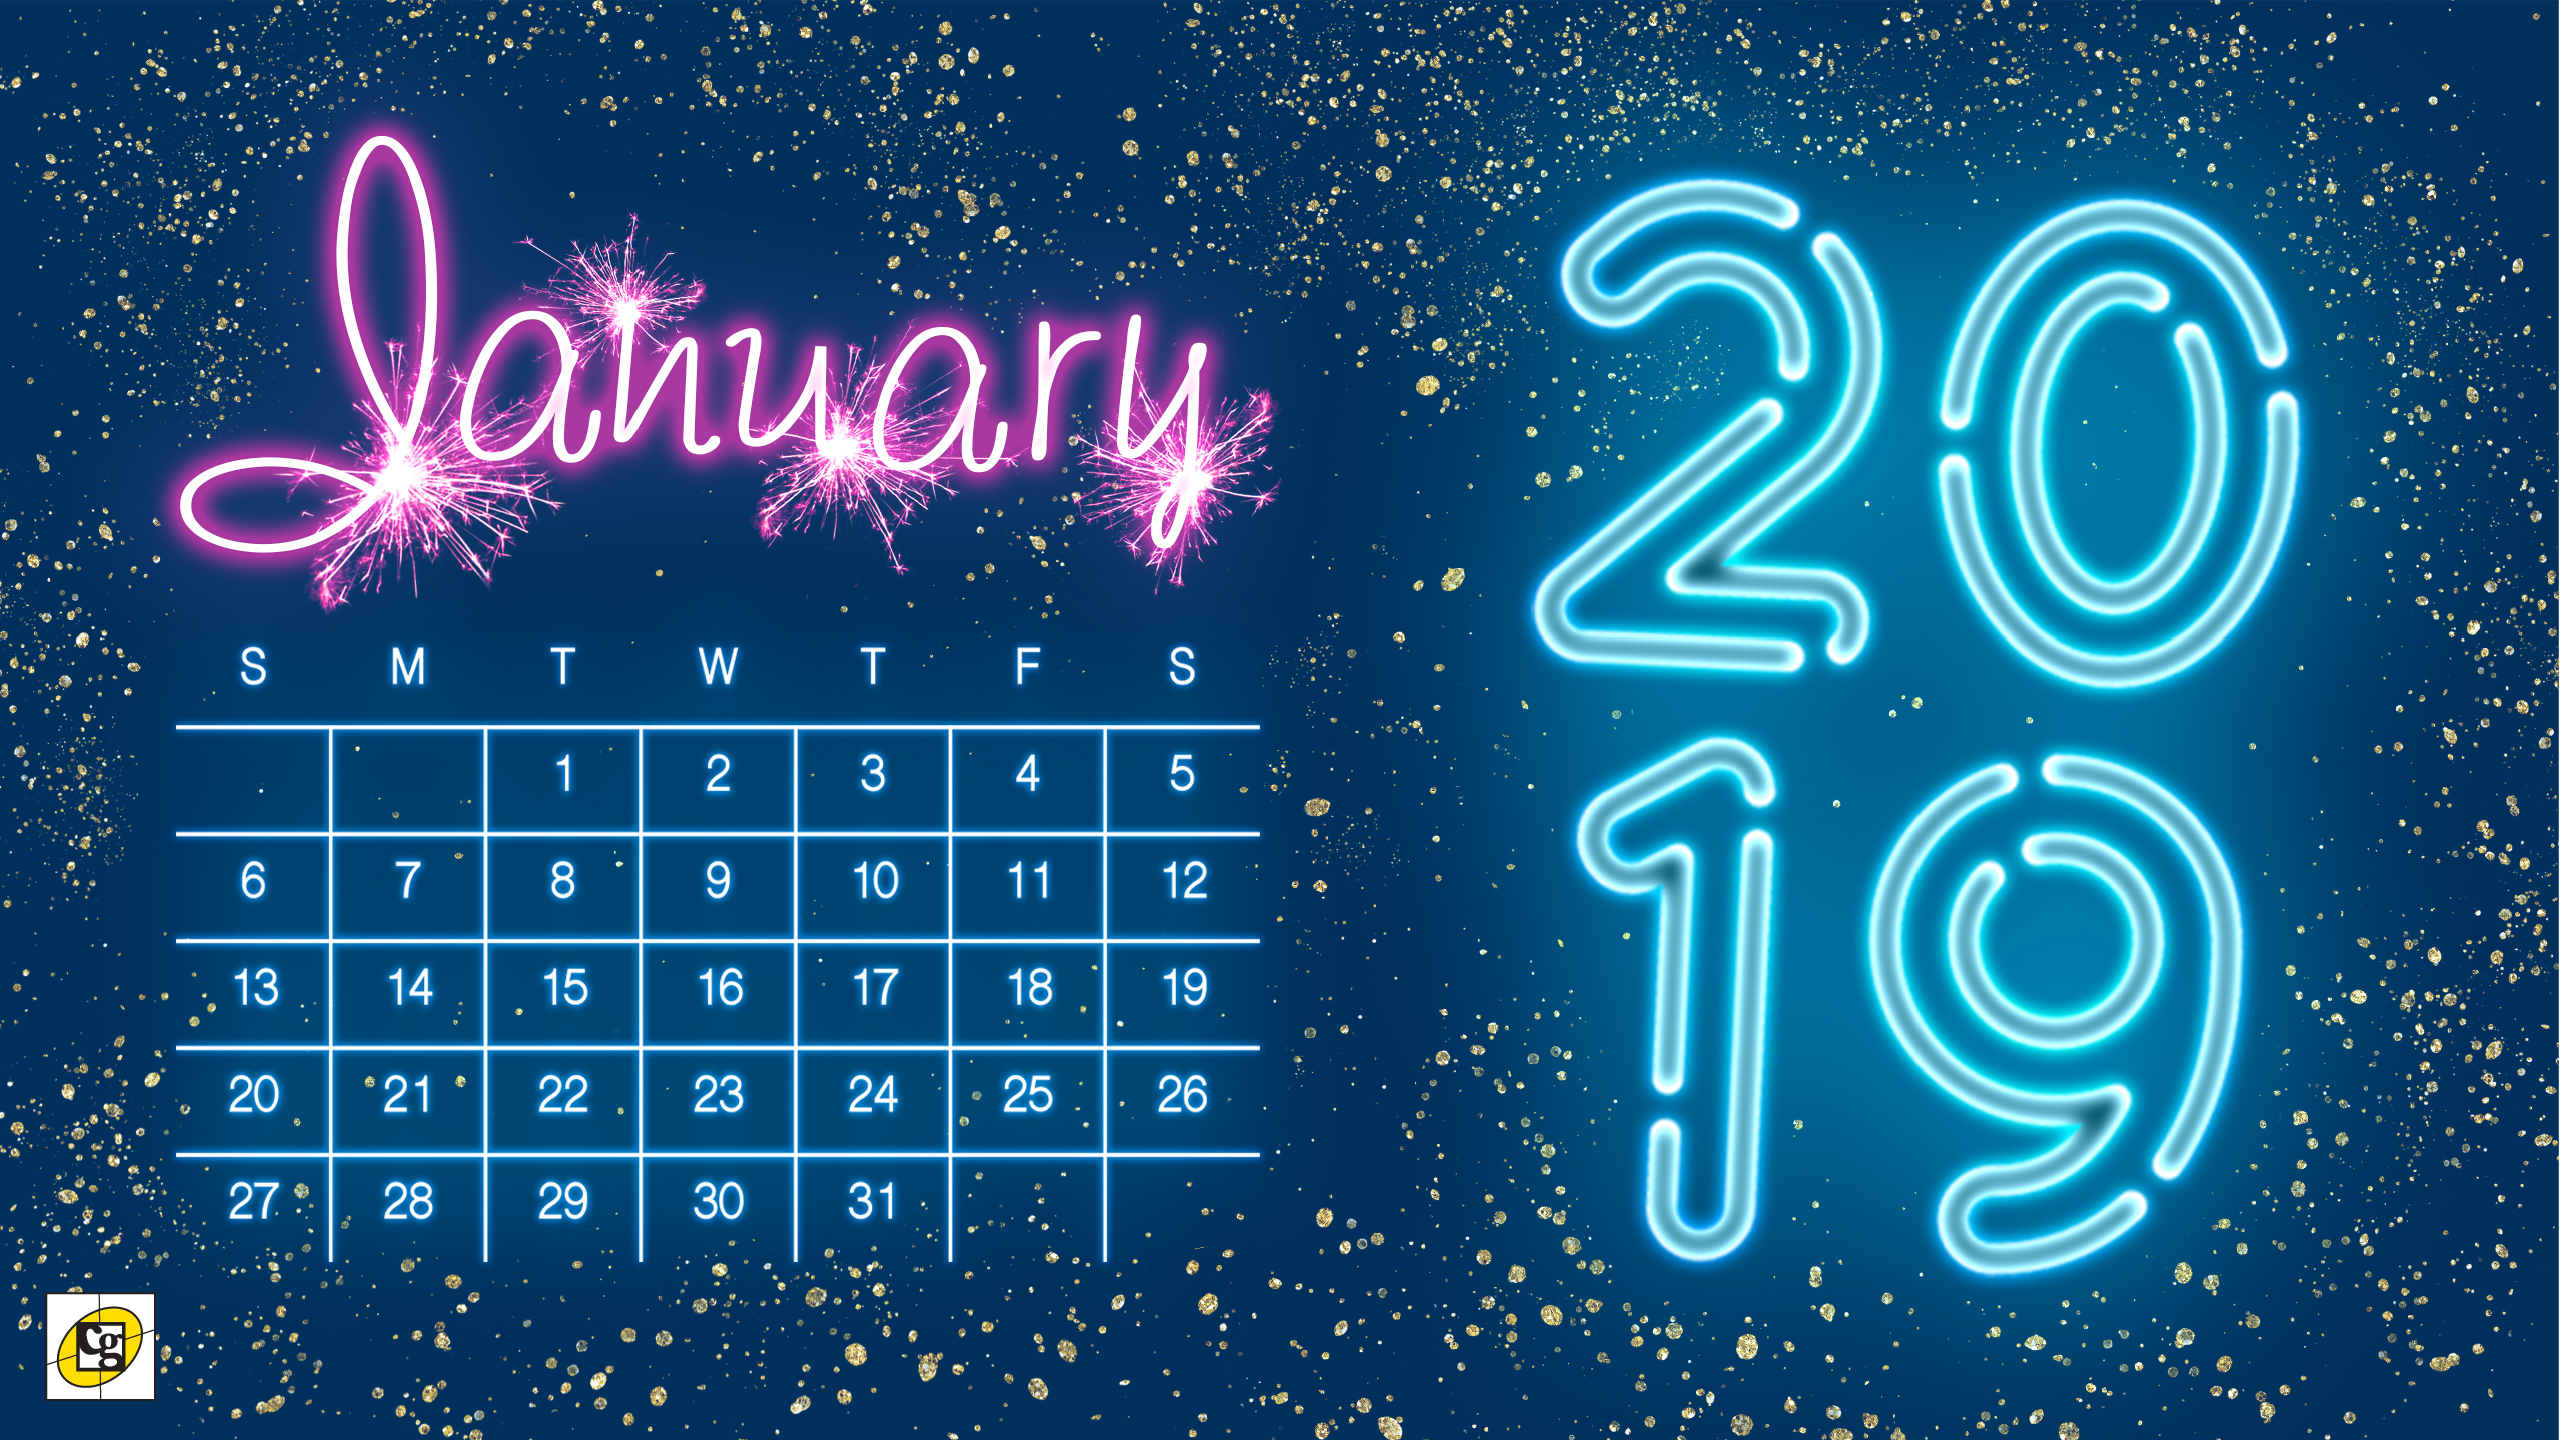 Free Calendar For January 2019